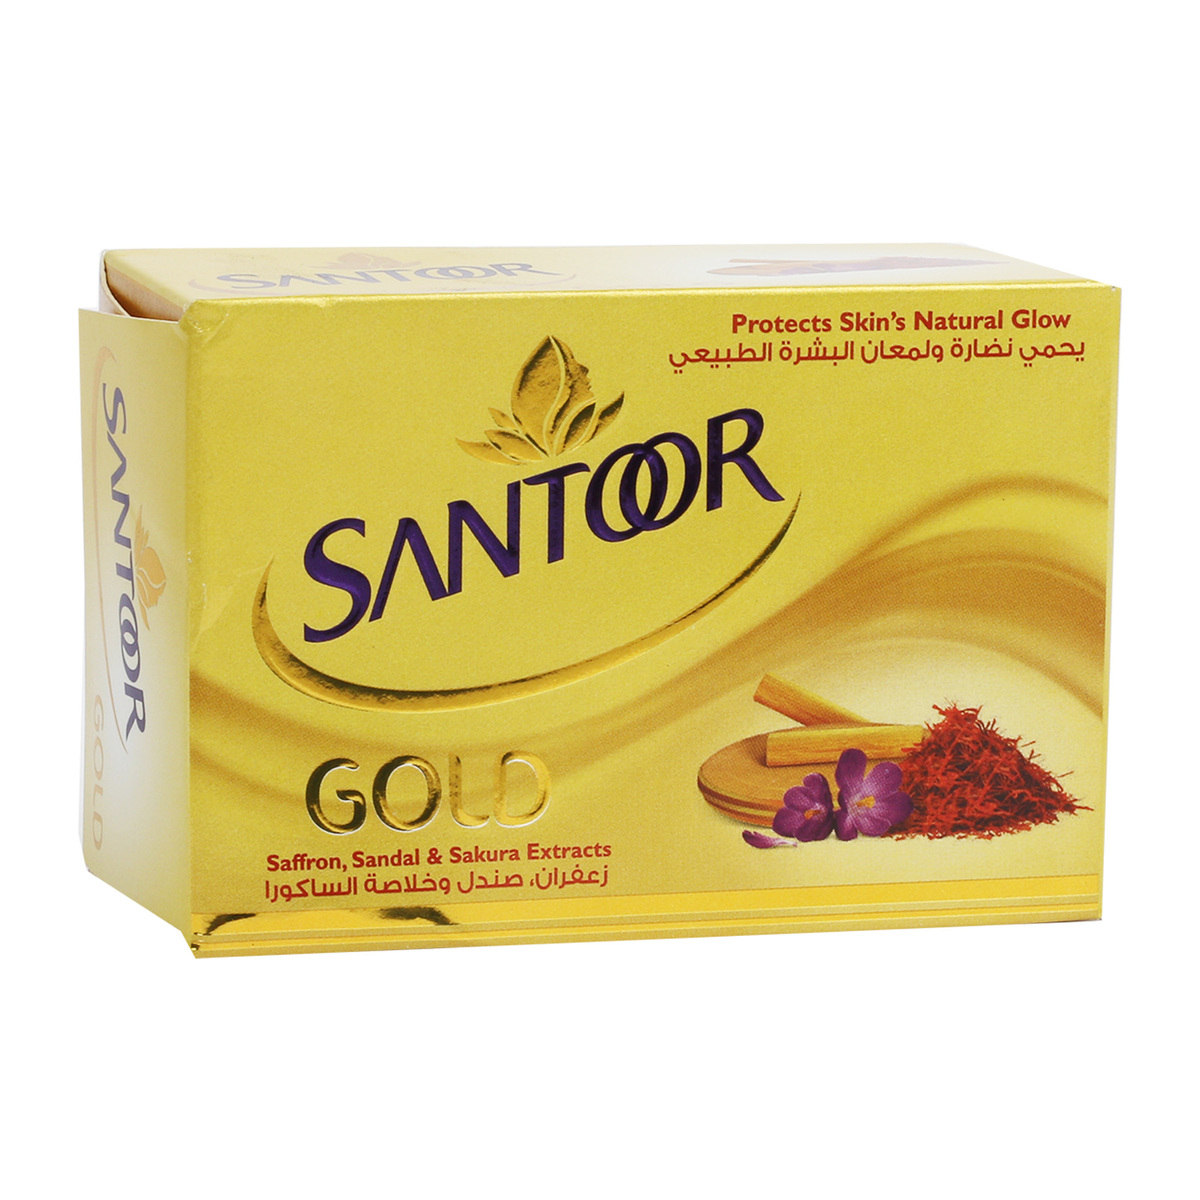 Santoor Soap Gold 125g